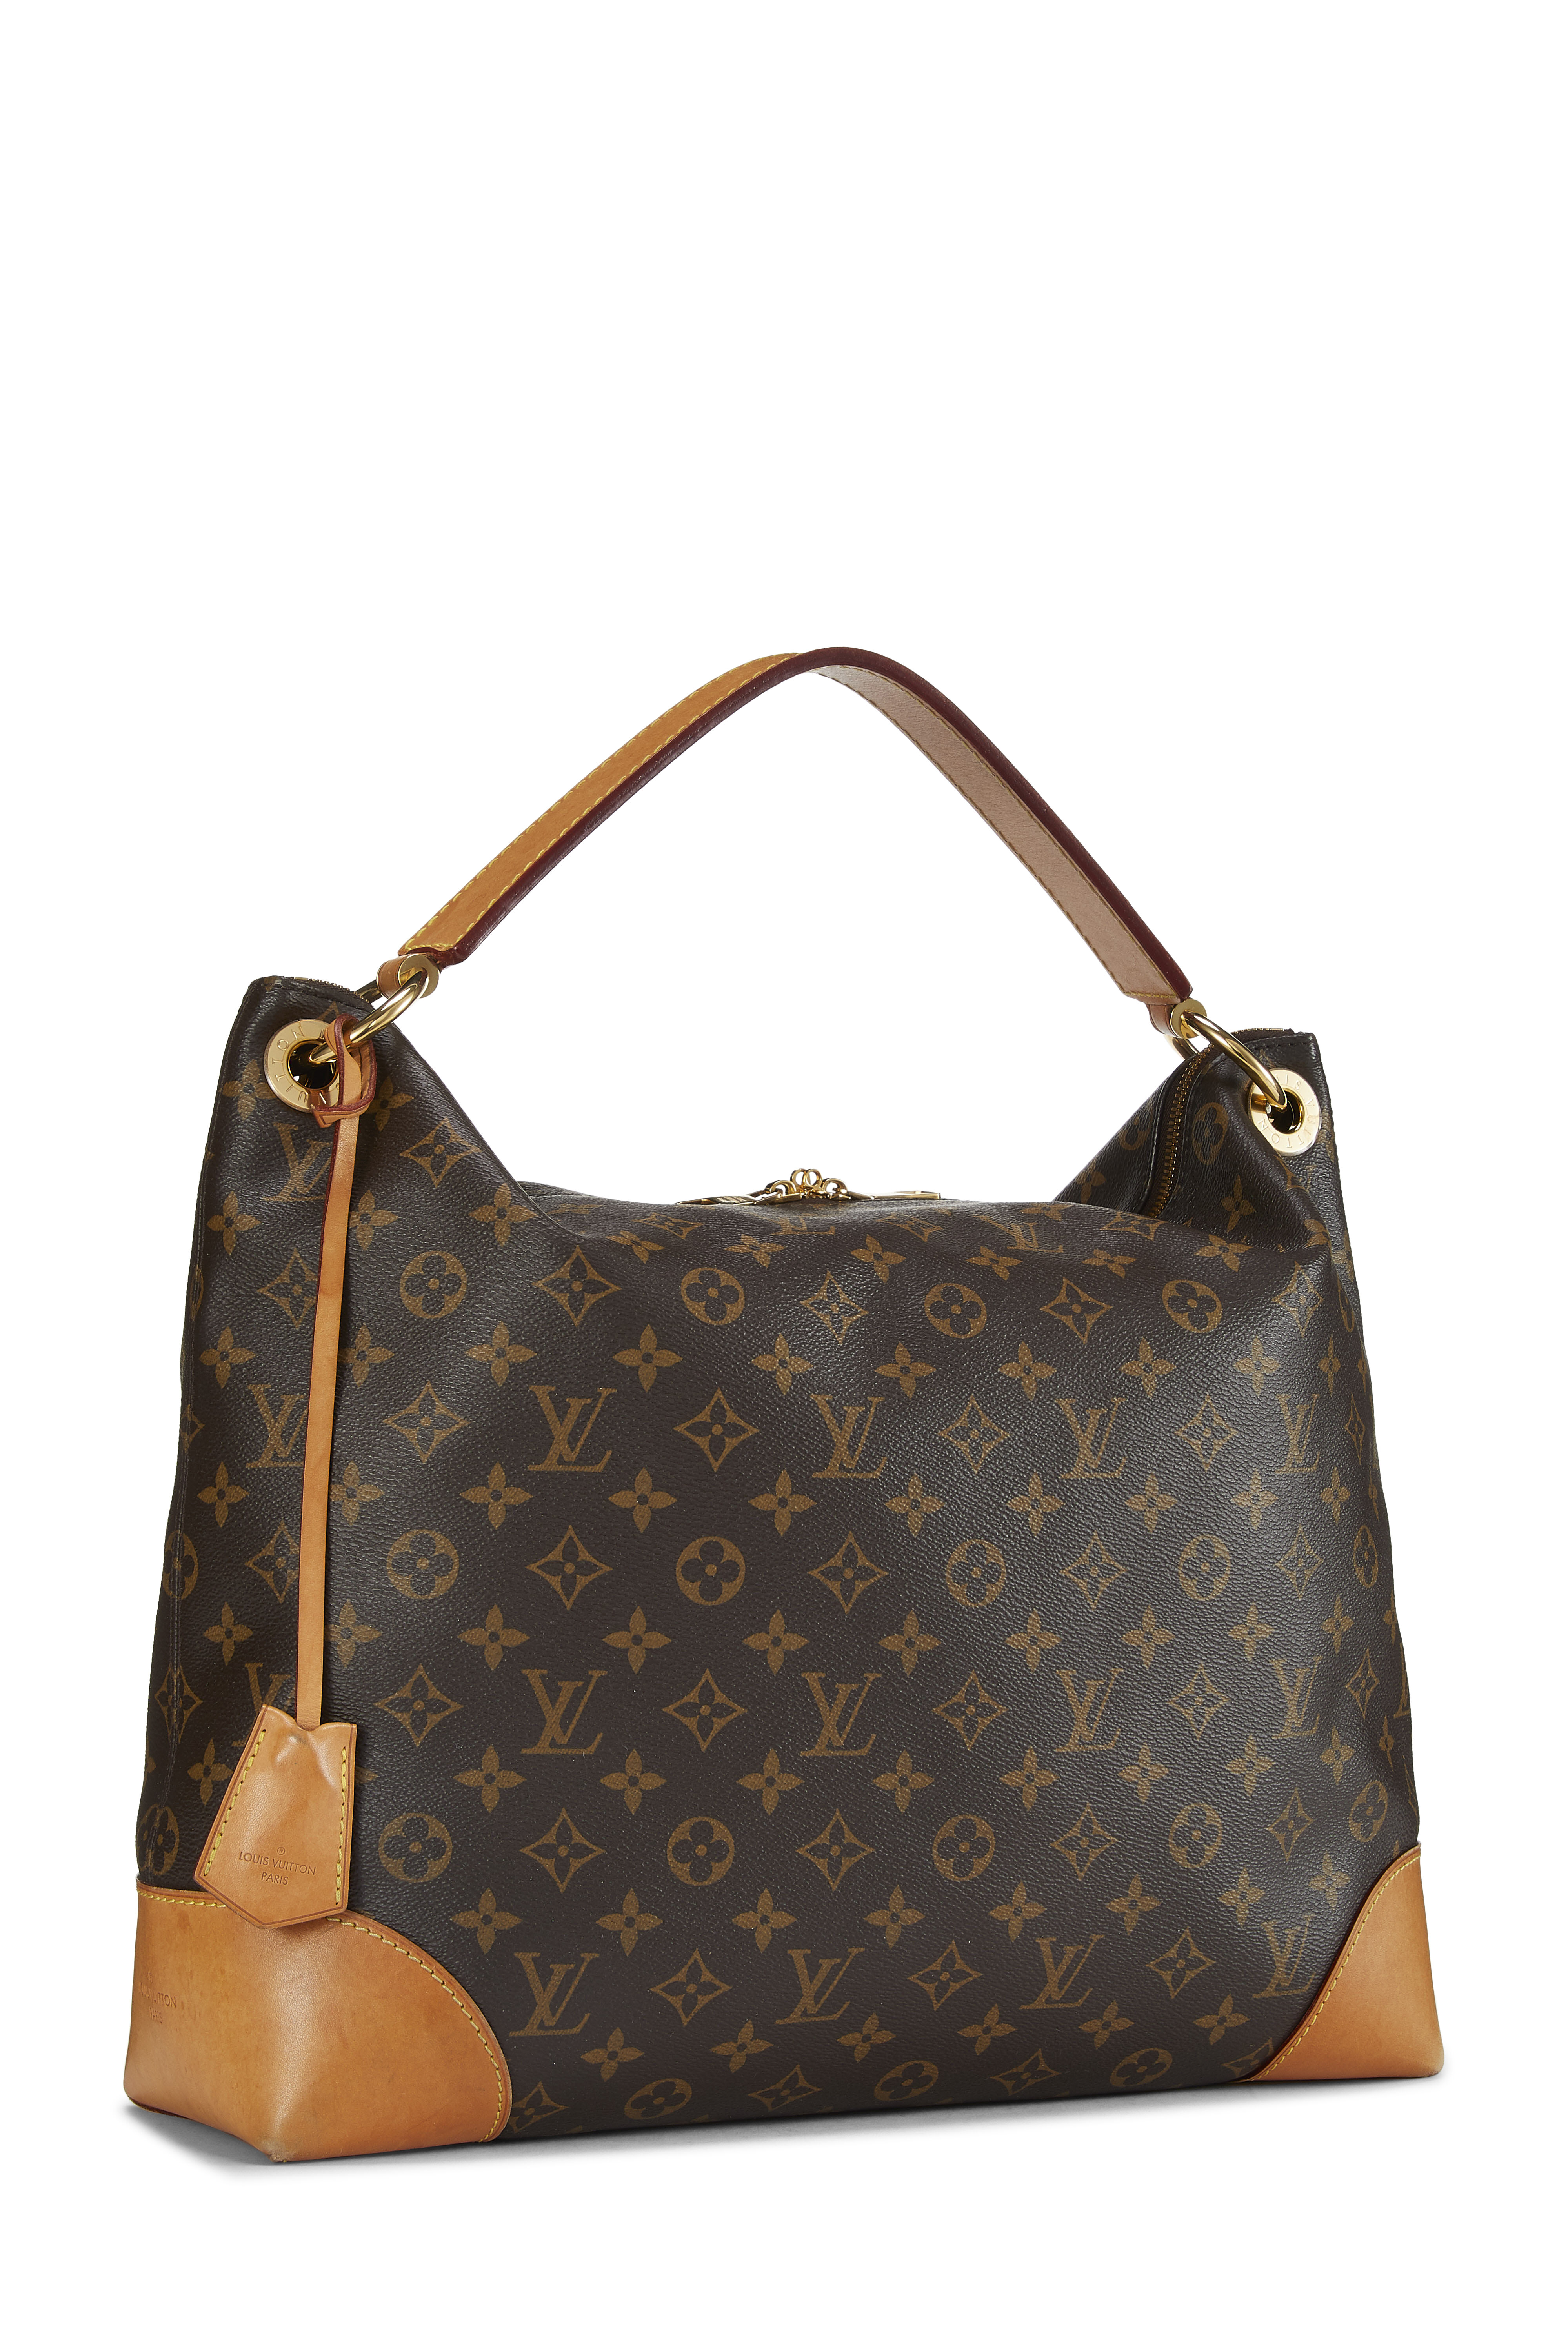 Louis Vuitton Berri MM bag with Animal MNG Camel strap  Bukowskis